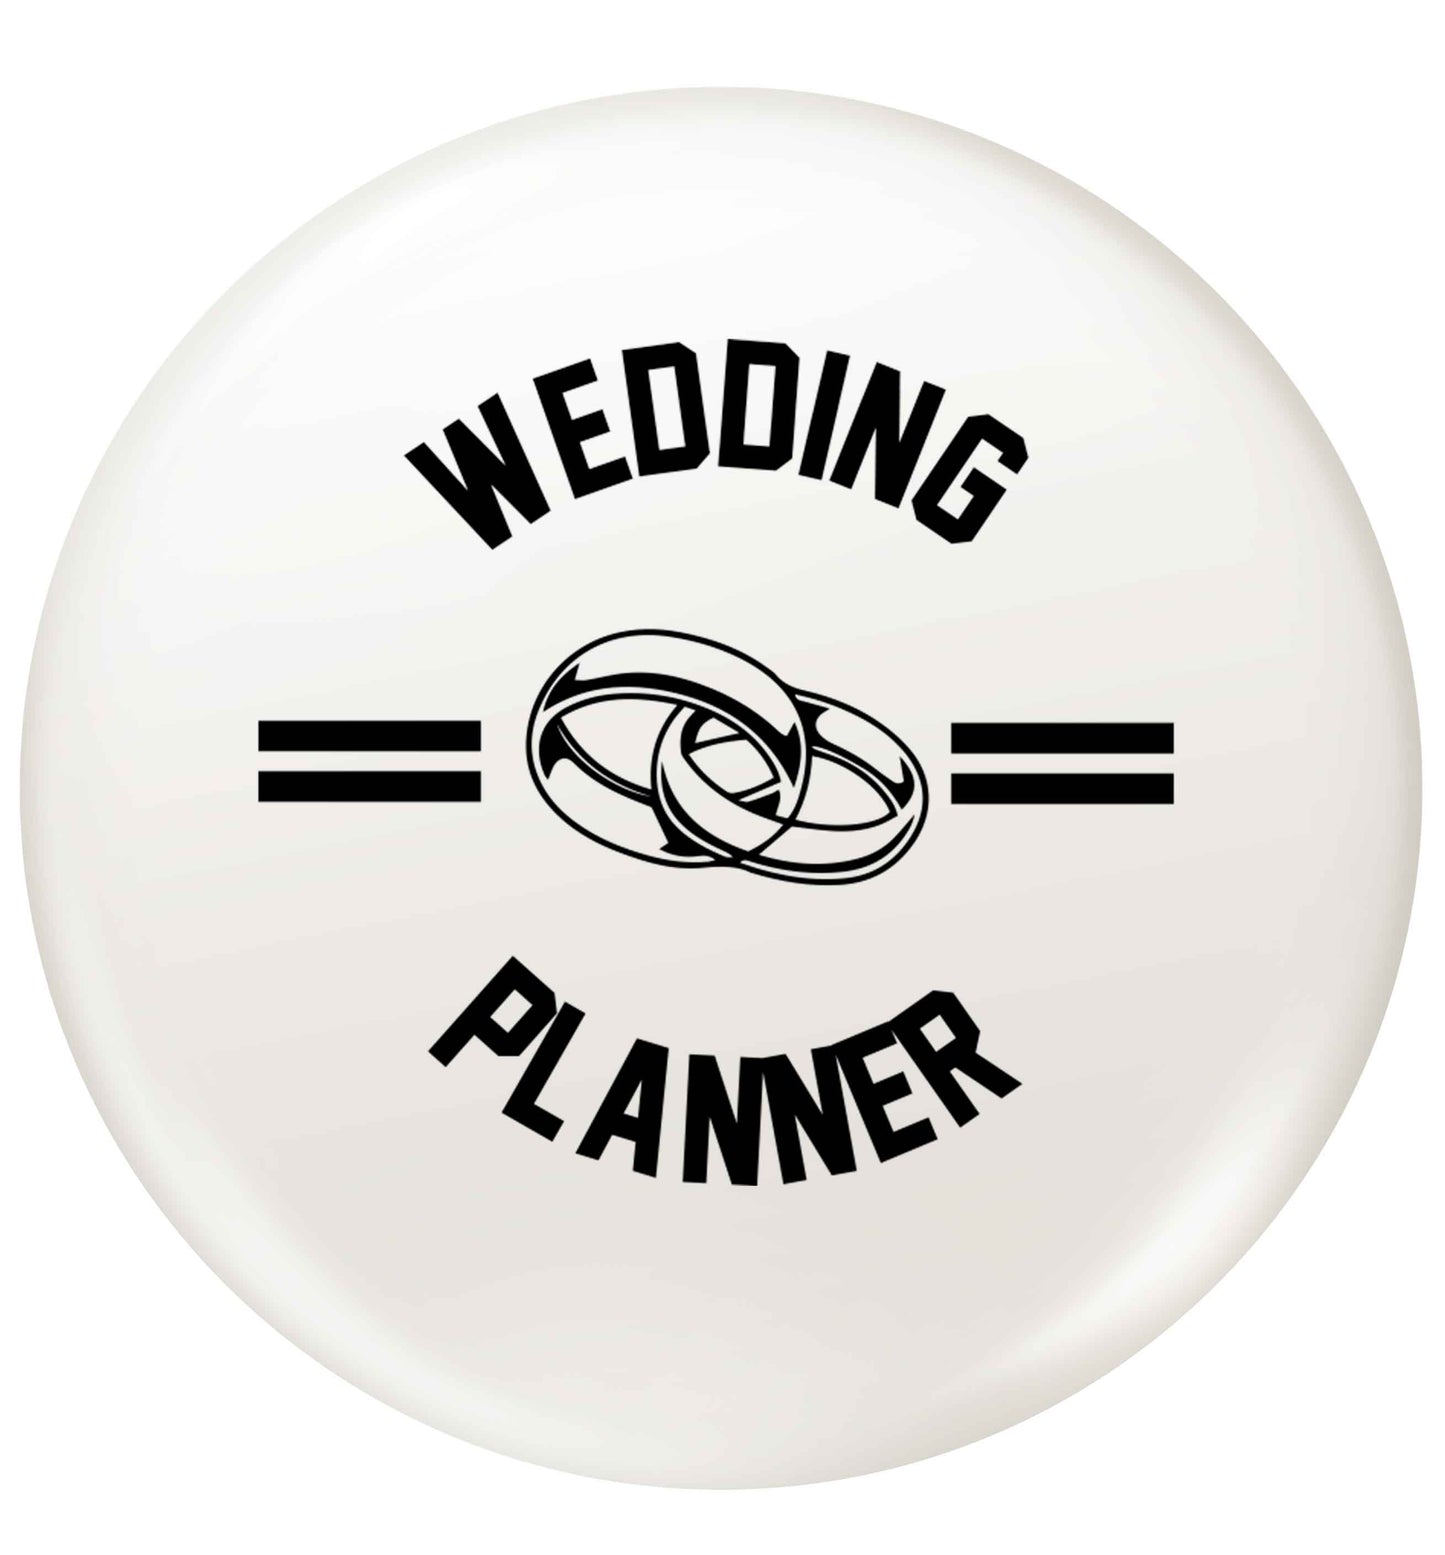 Wedding planner small 25mm Pin badge